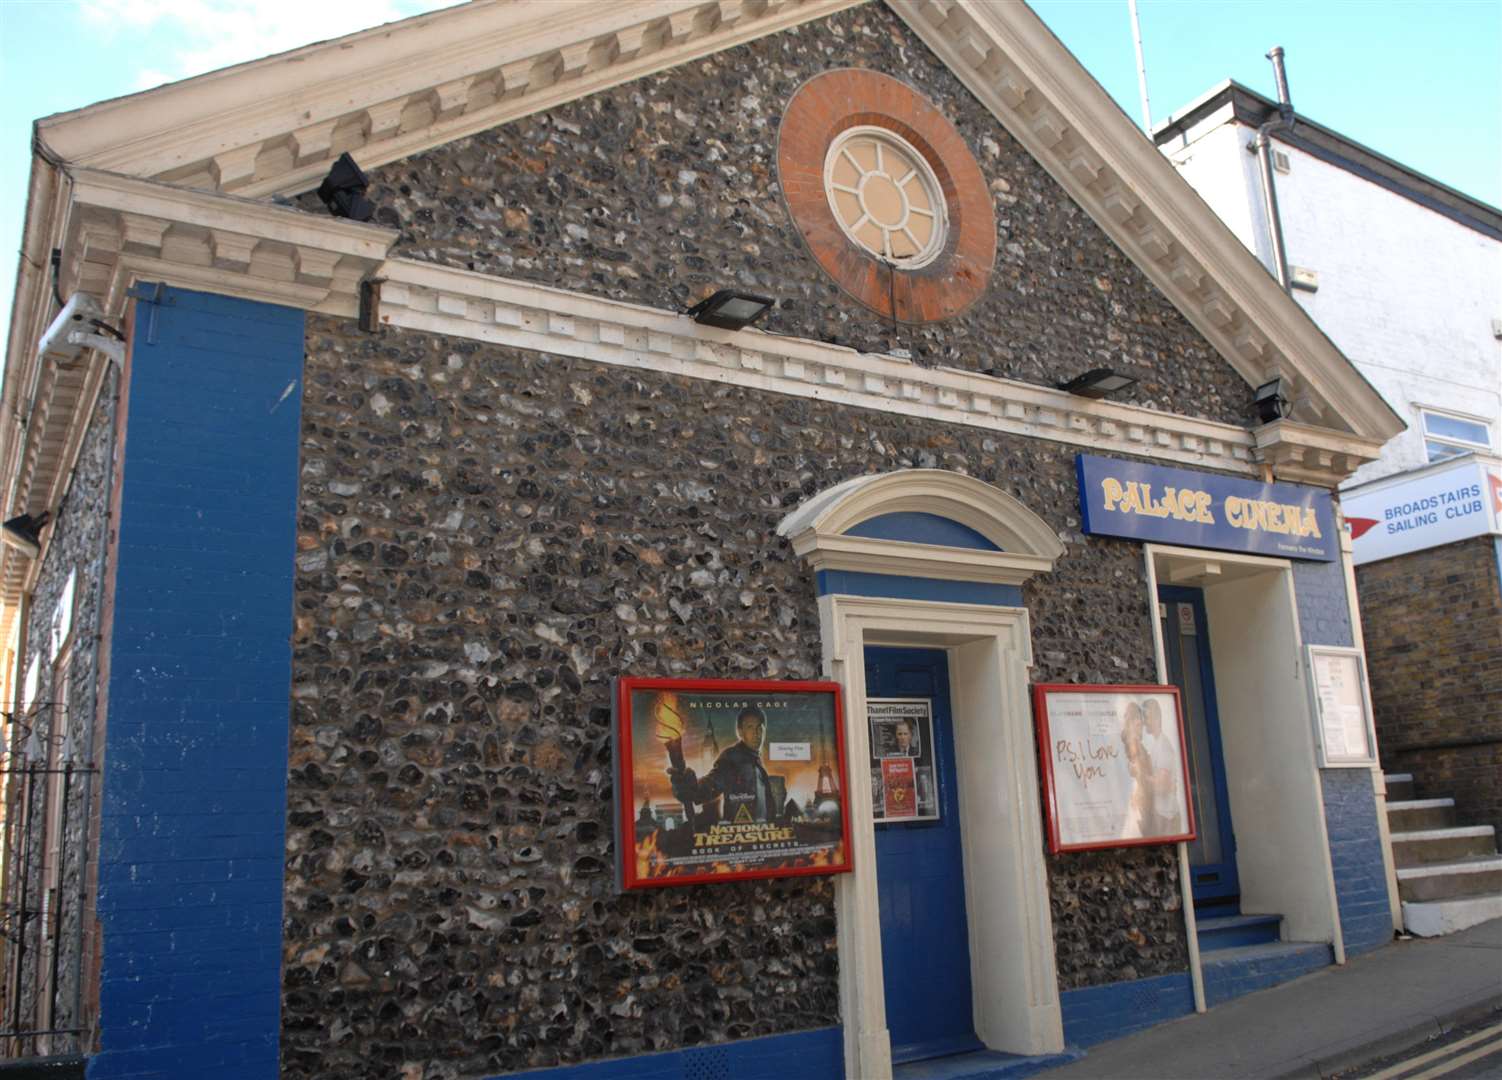 The Palace Cinema, Broadstairs